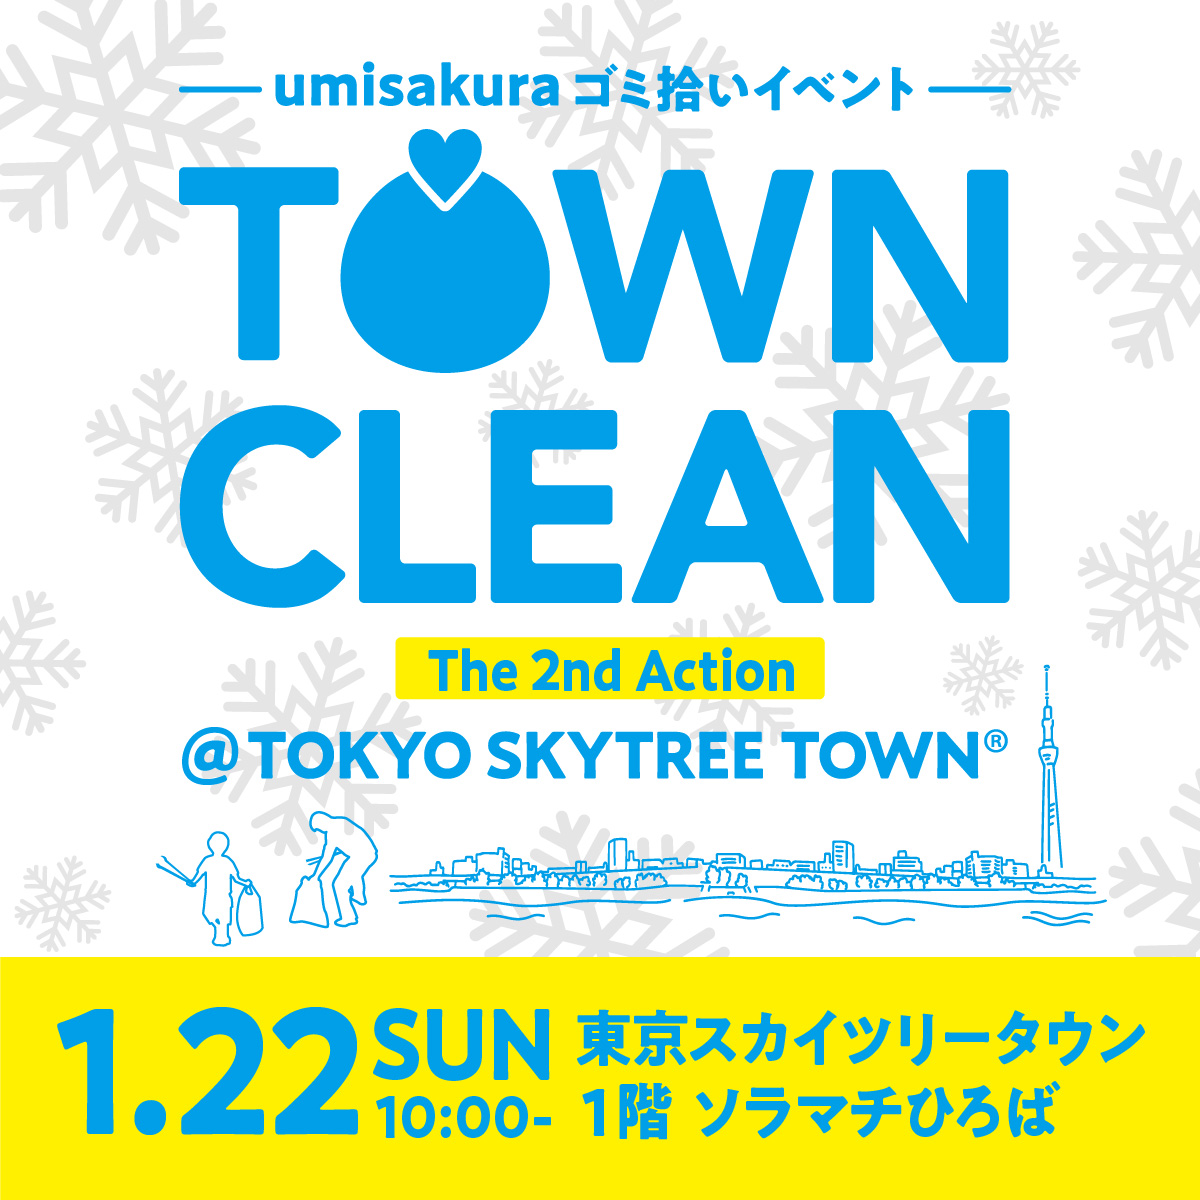 TOWN CLEAN＠TOKYO SKYTREE TOWN®